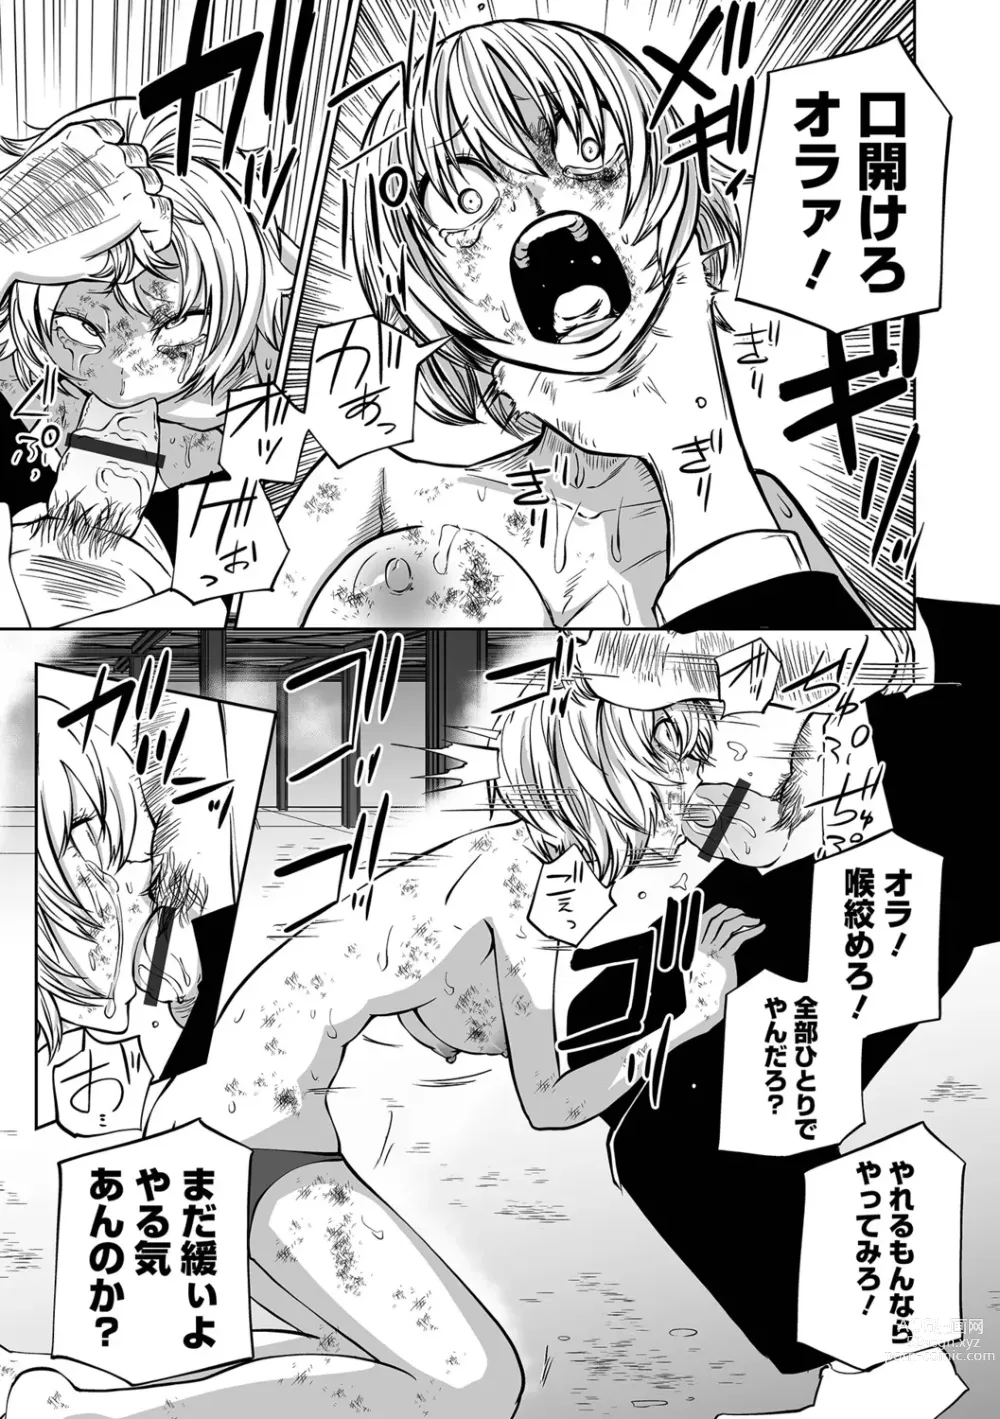 Page 99 of manga Ryona King Vol.18